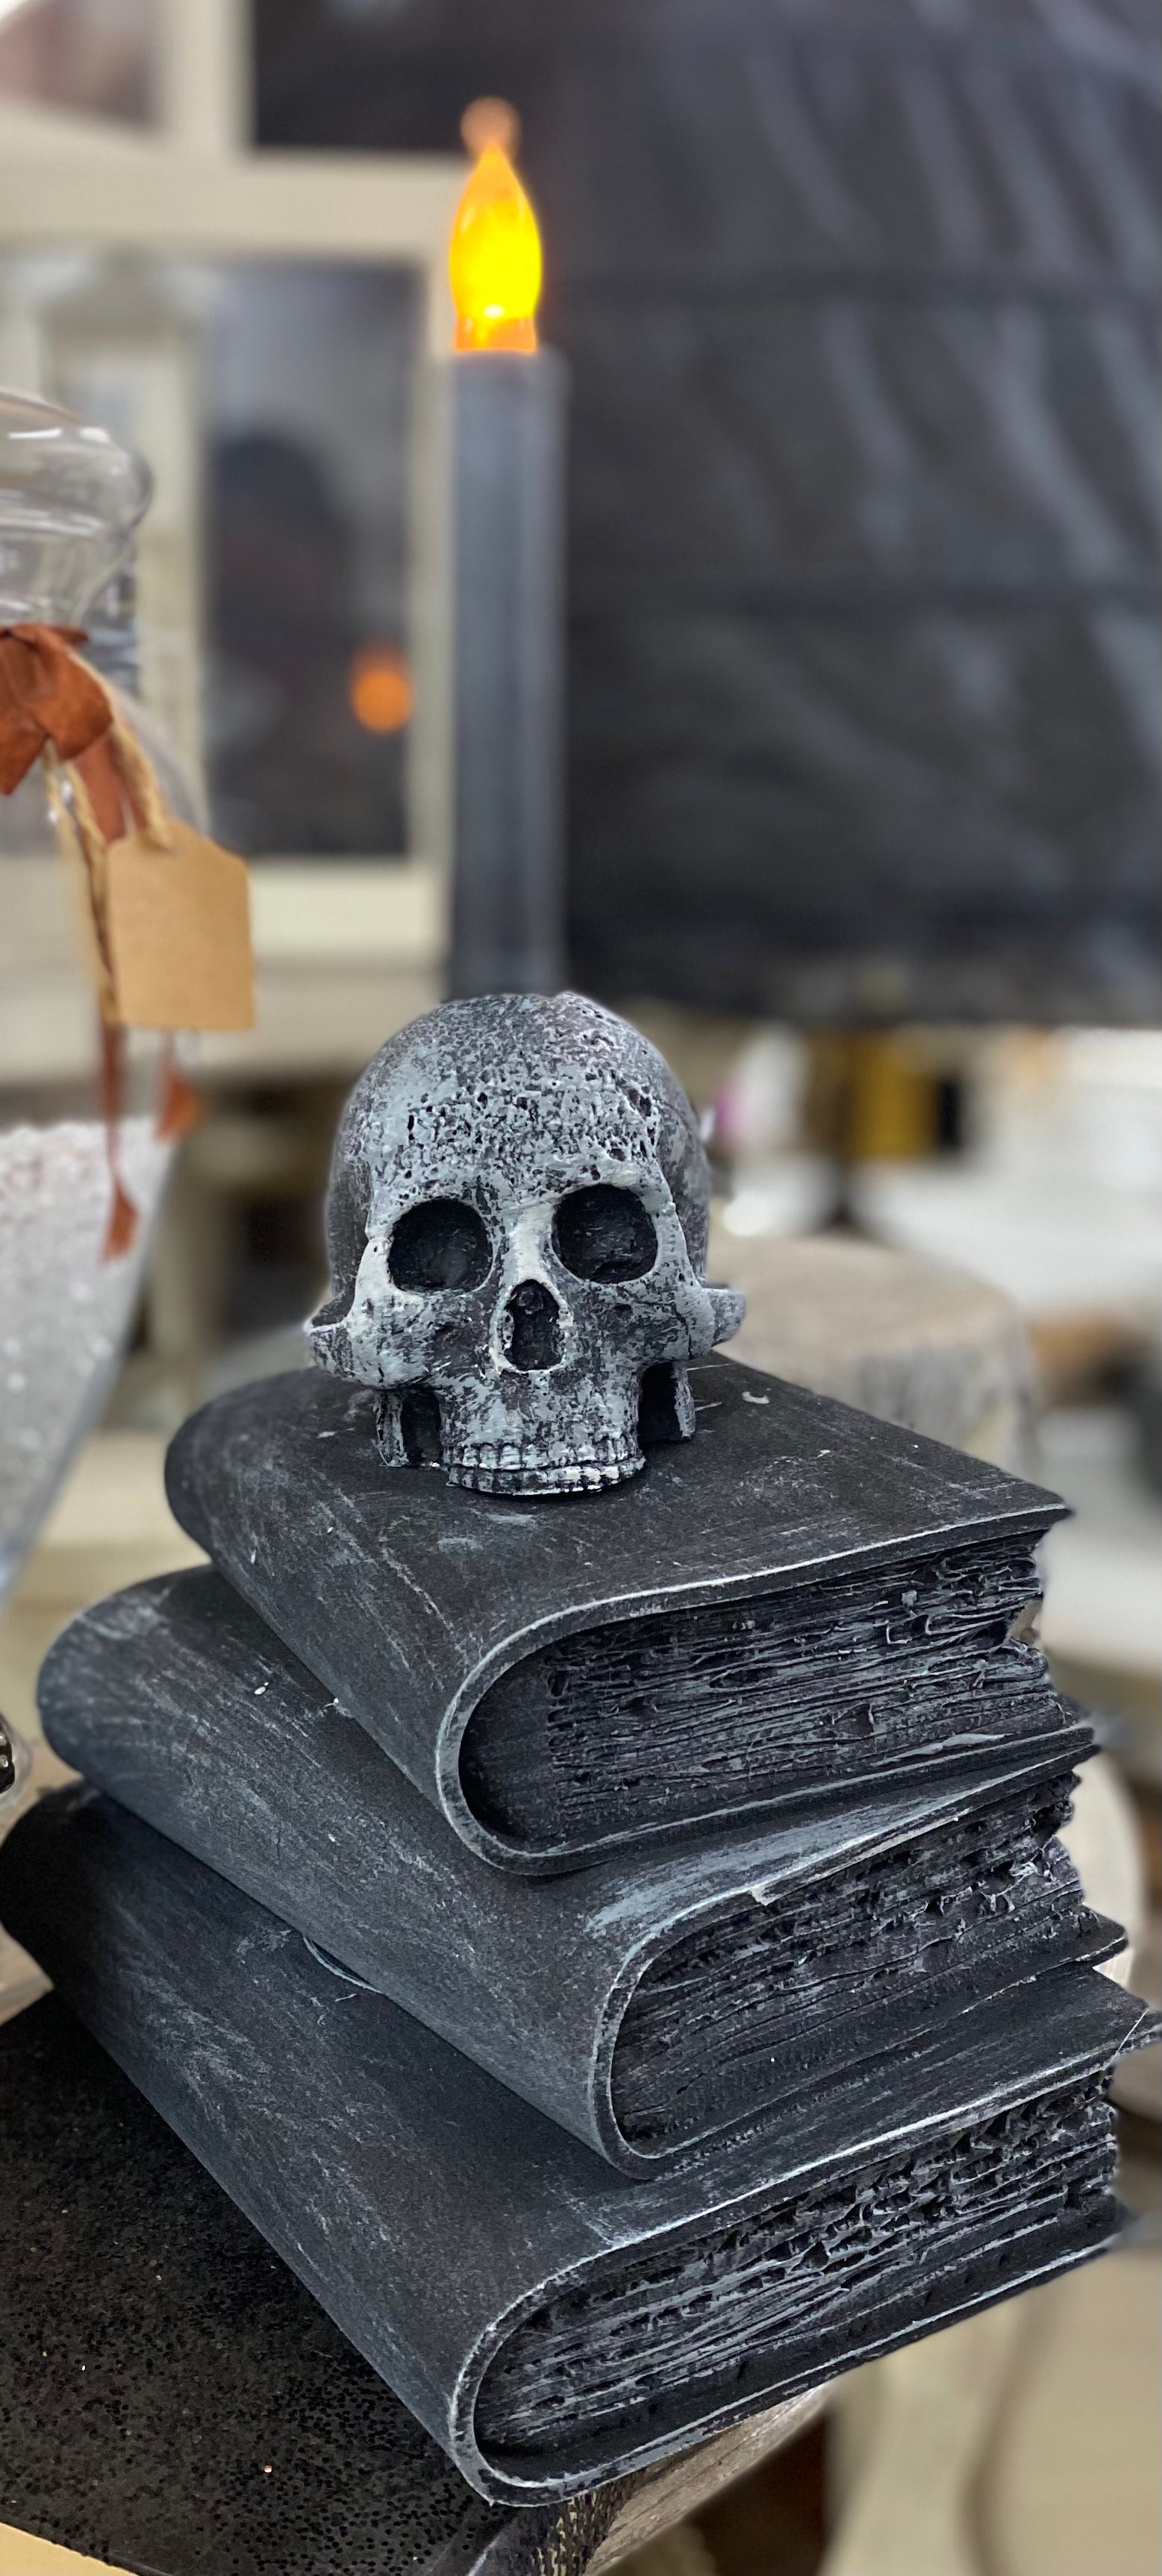 Davis Graveyard Skull and Books Workshop on Friday October 13th